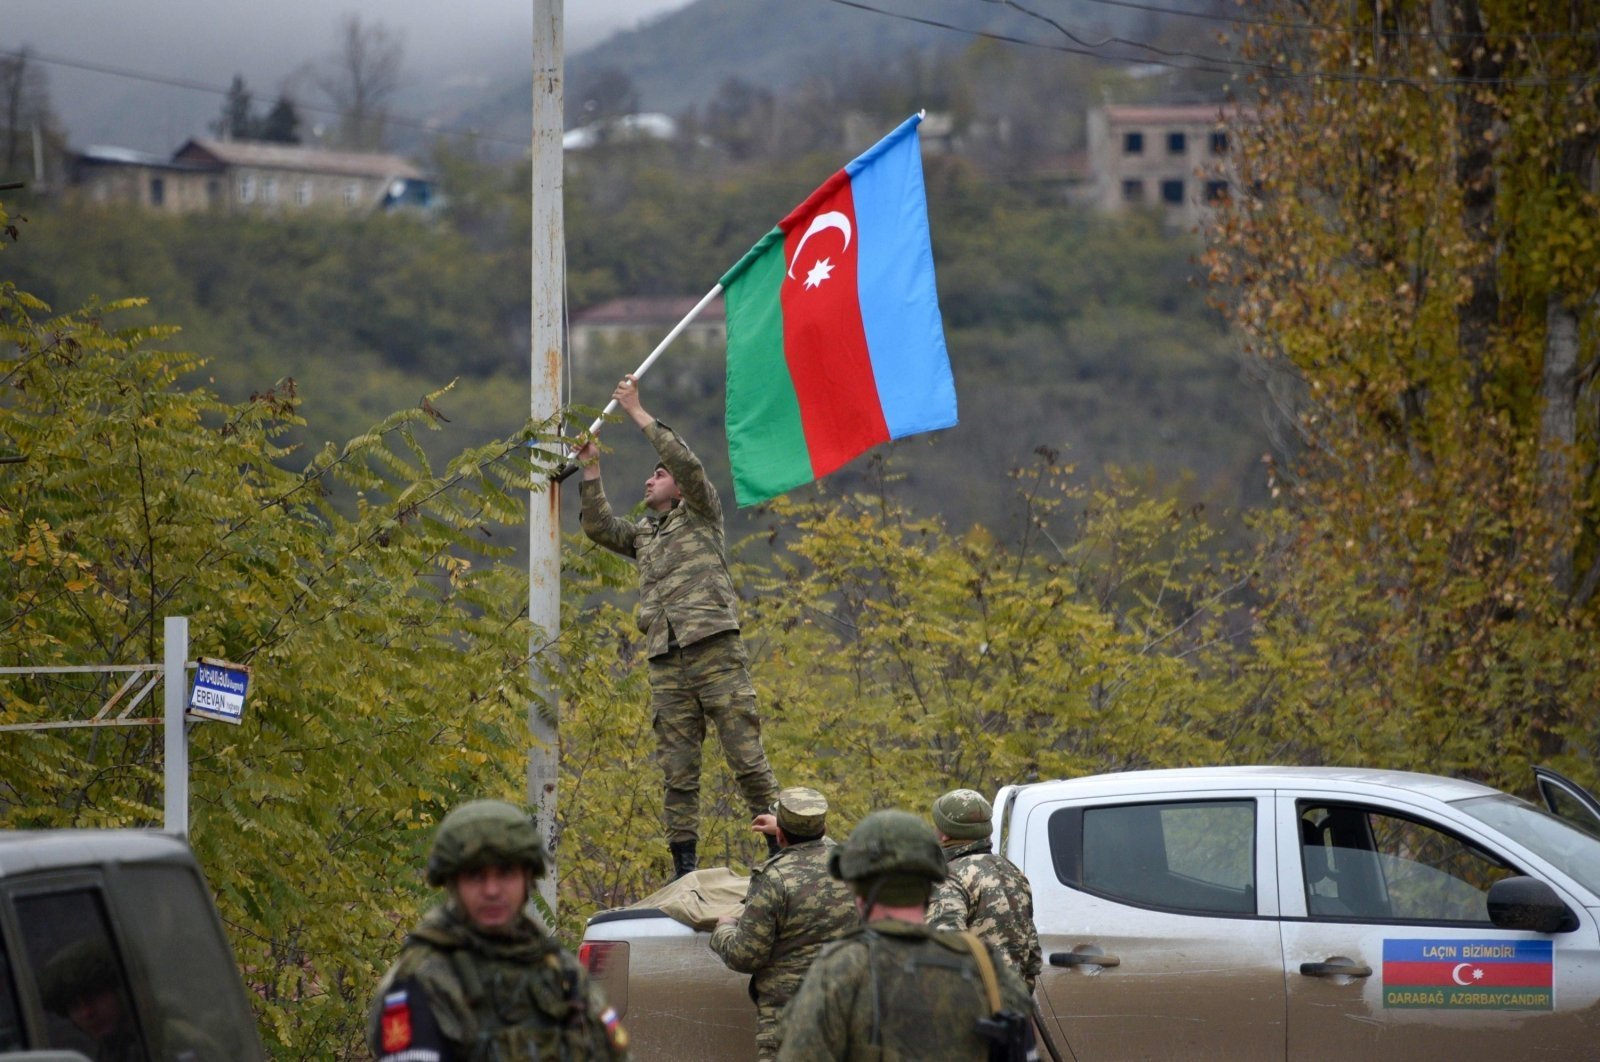 An Azerbaijani soldier fixes a national flag on a lamppost in the town of Lachin, the Nagorno-Karabakh region, Azerbaijan, Dec. 1, 2020. (AFP Photo)